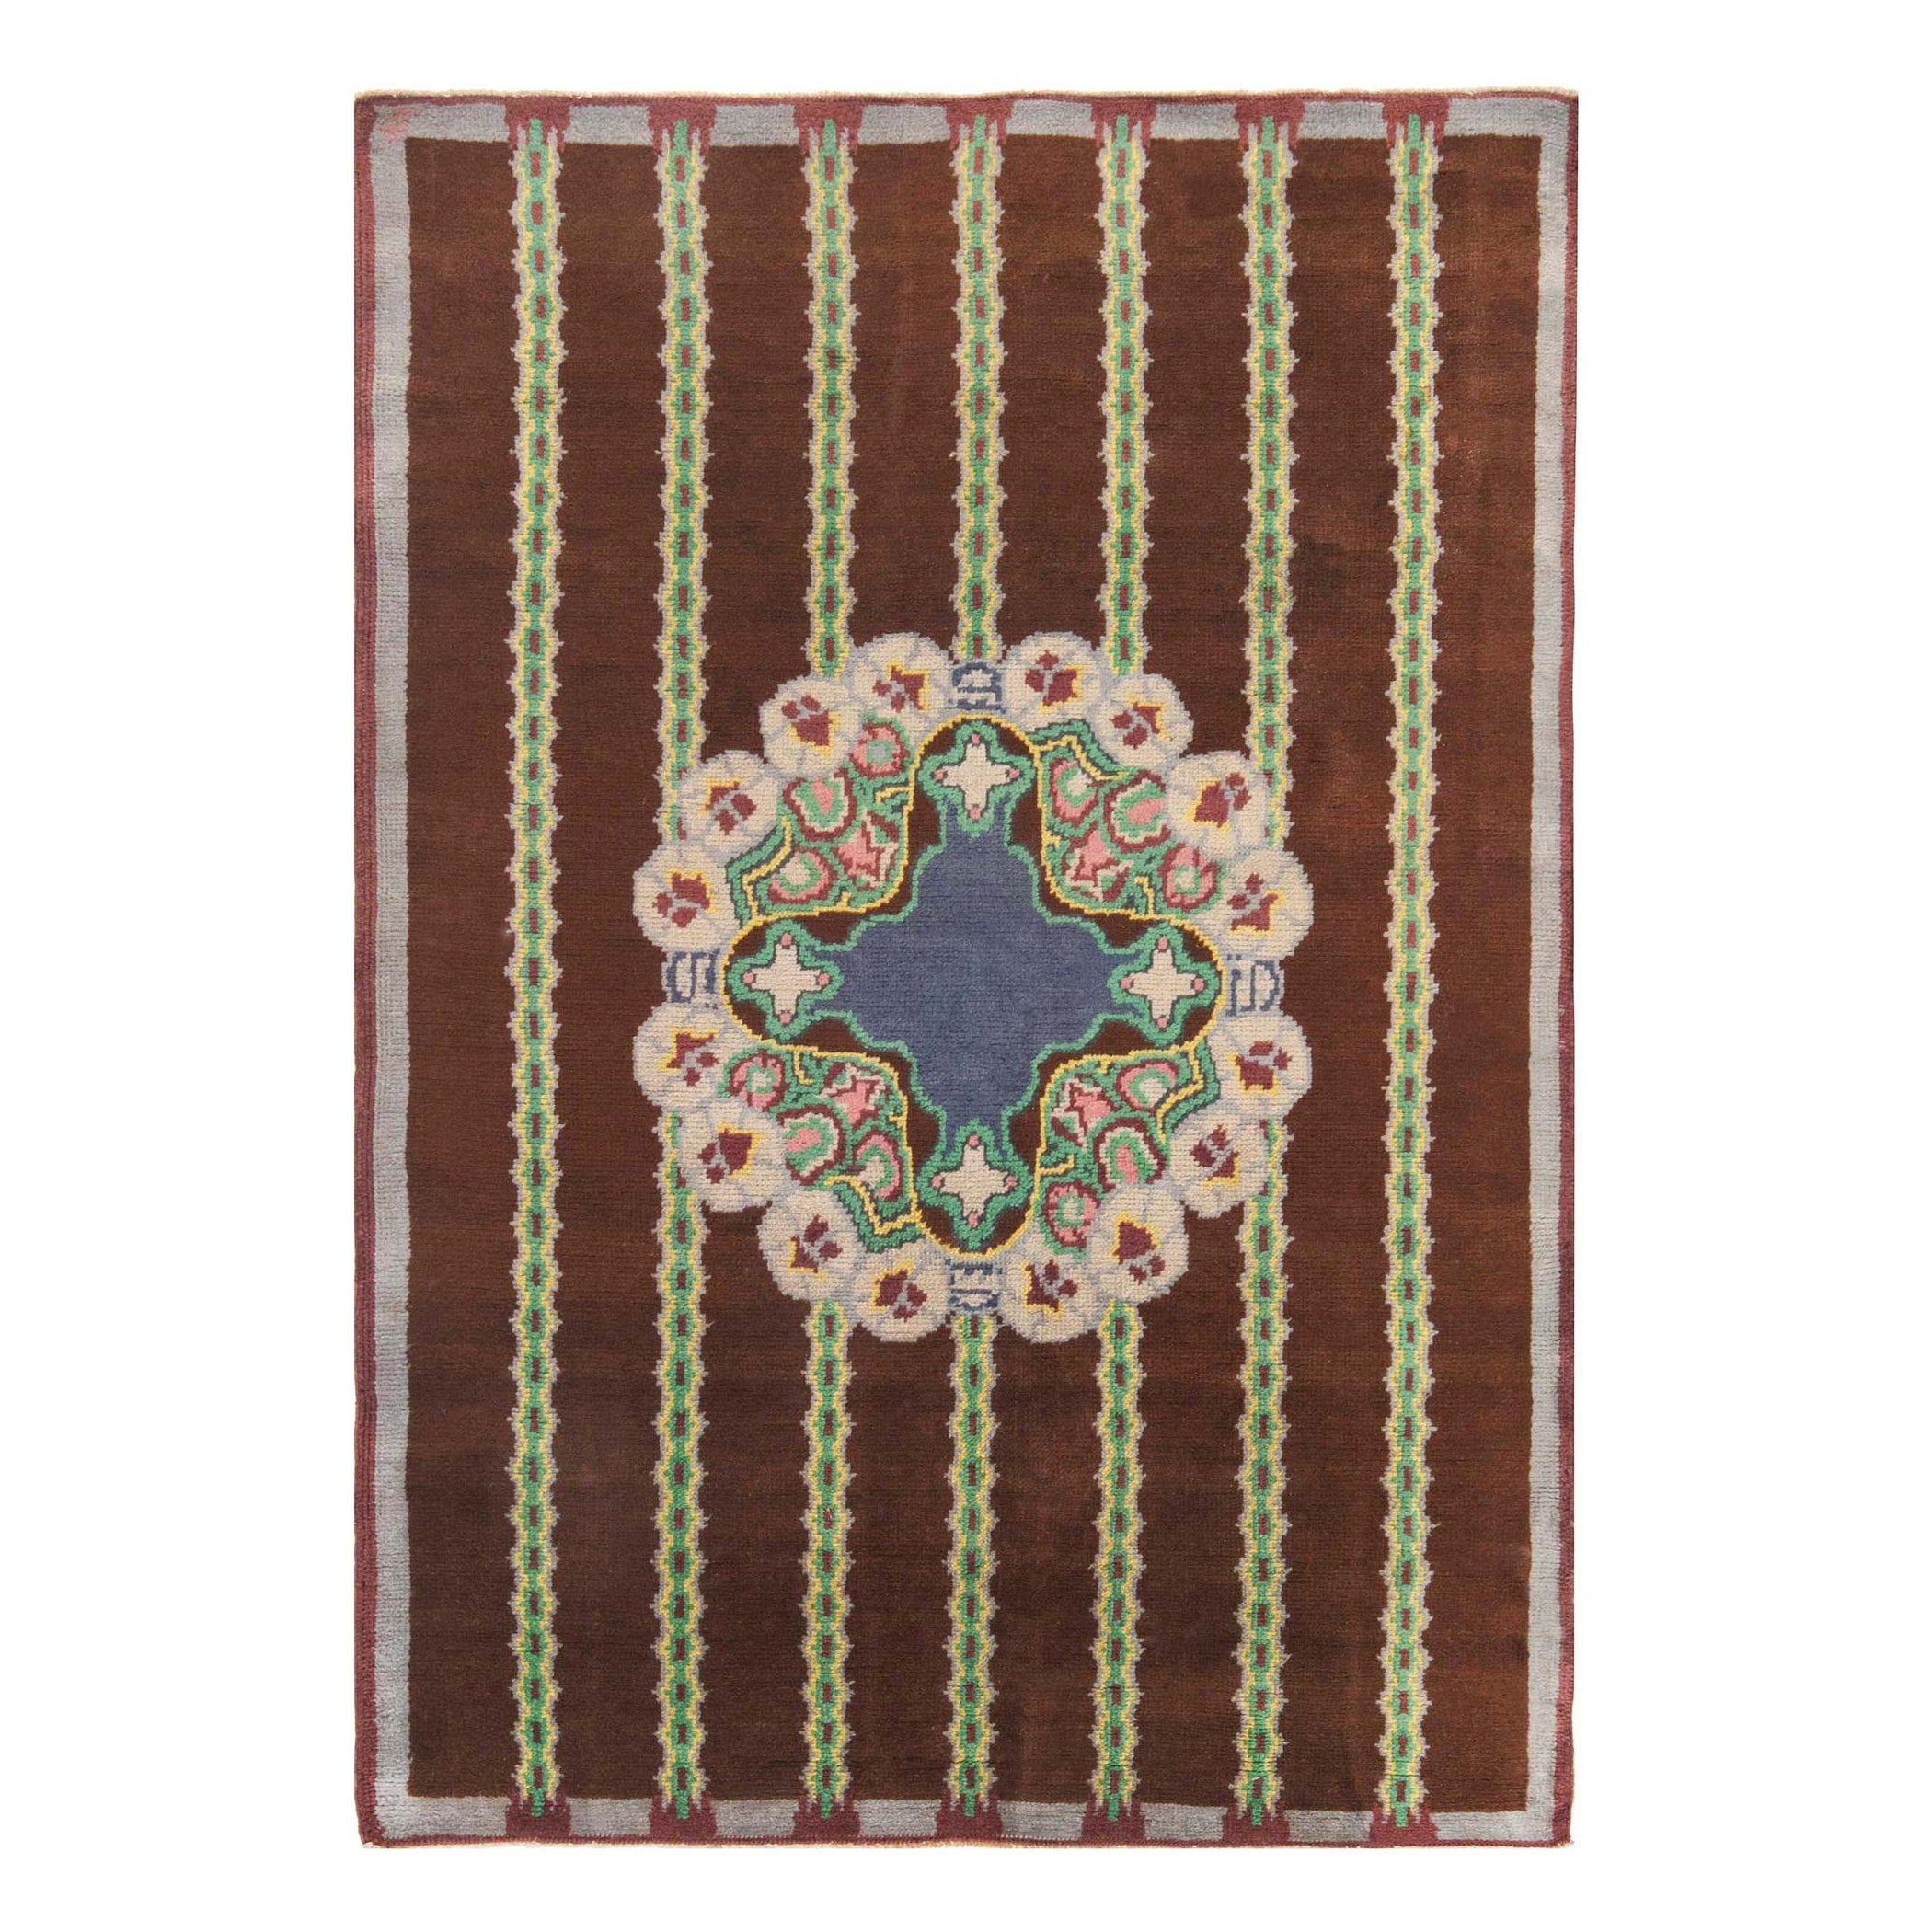 Französisch Art Deco Brown, Green Handmade Wool Rug